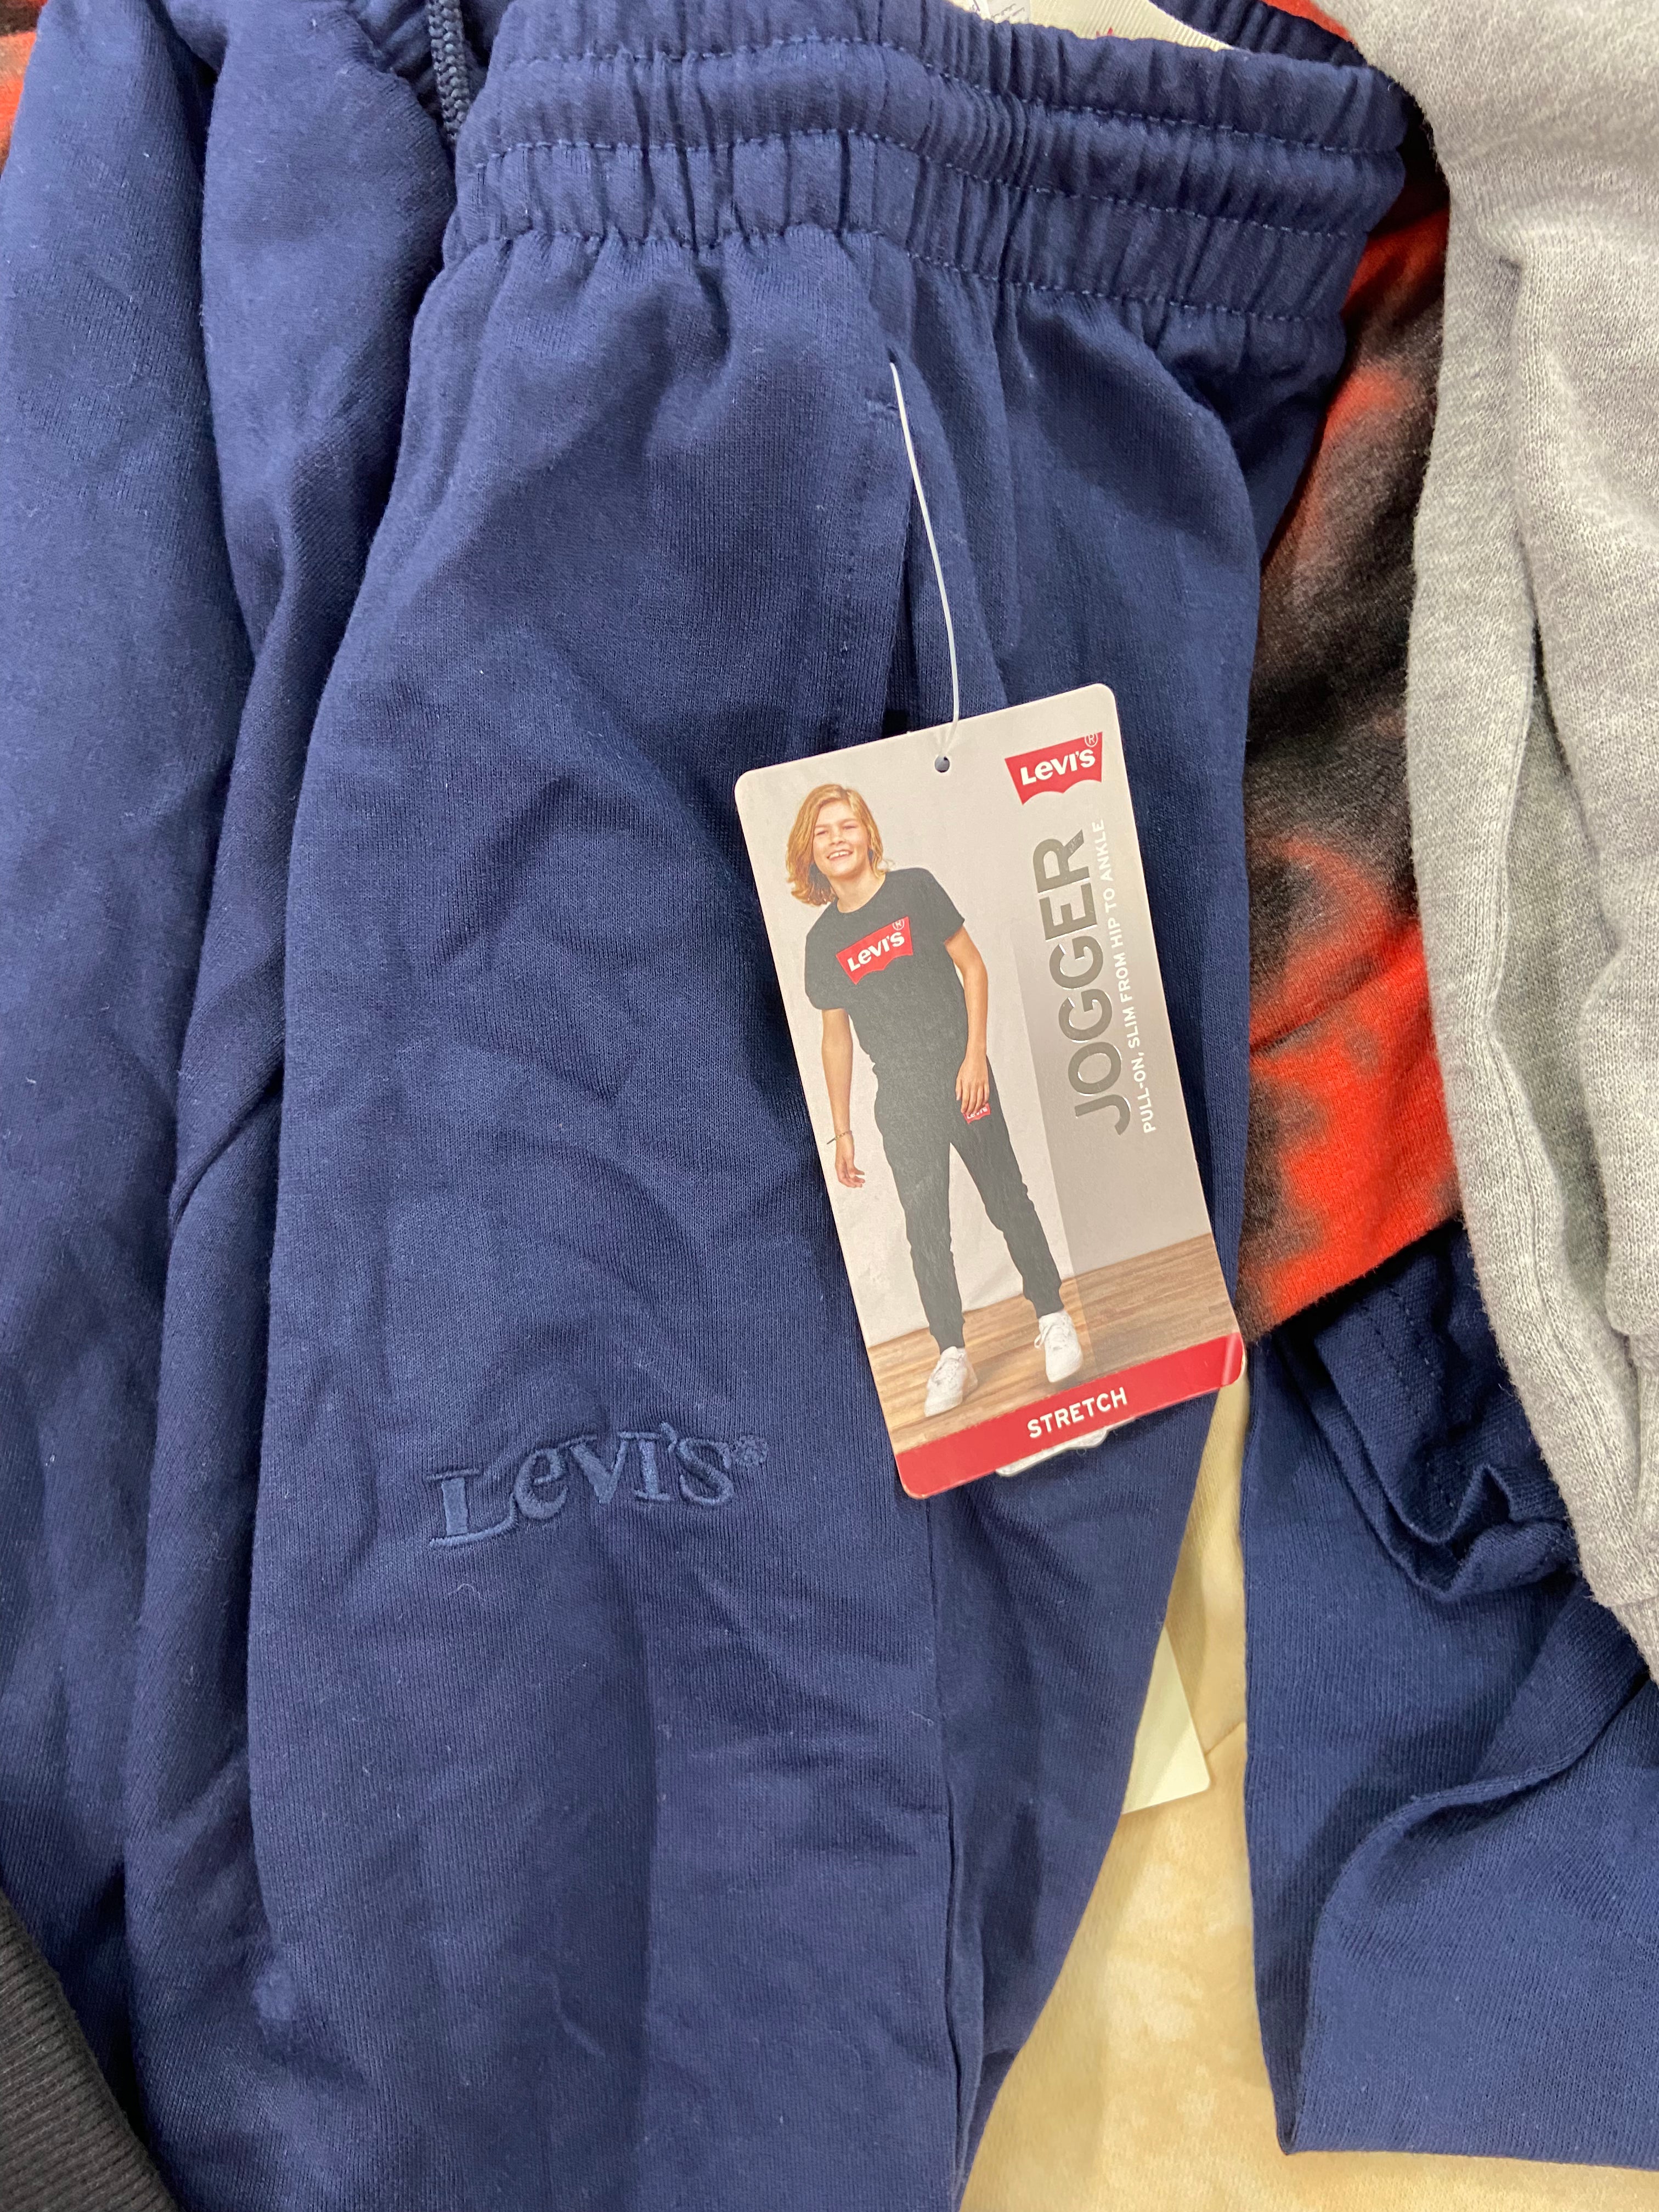 Assorted Ladies Fashion Pull On Printed Jean Like Leggings Wholesale